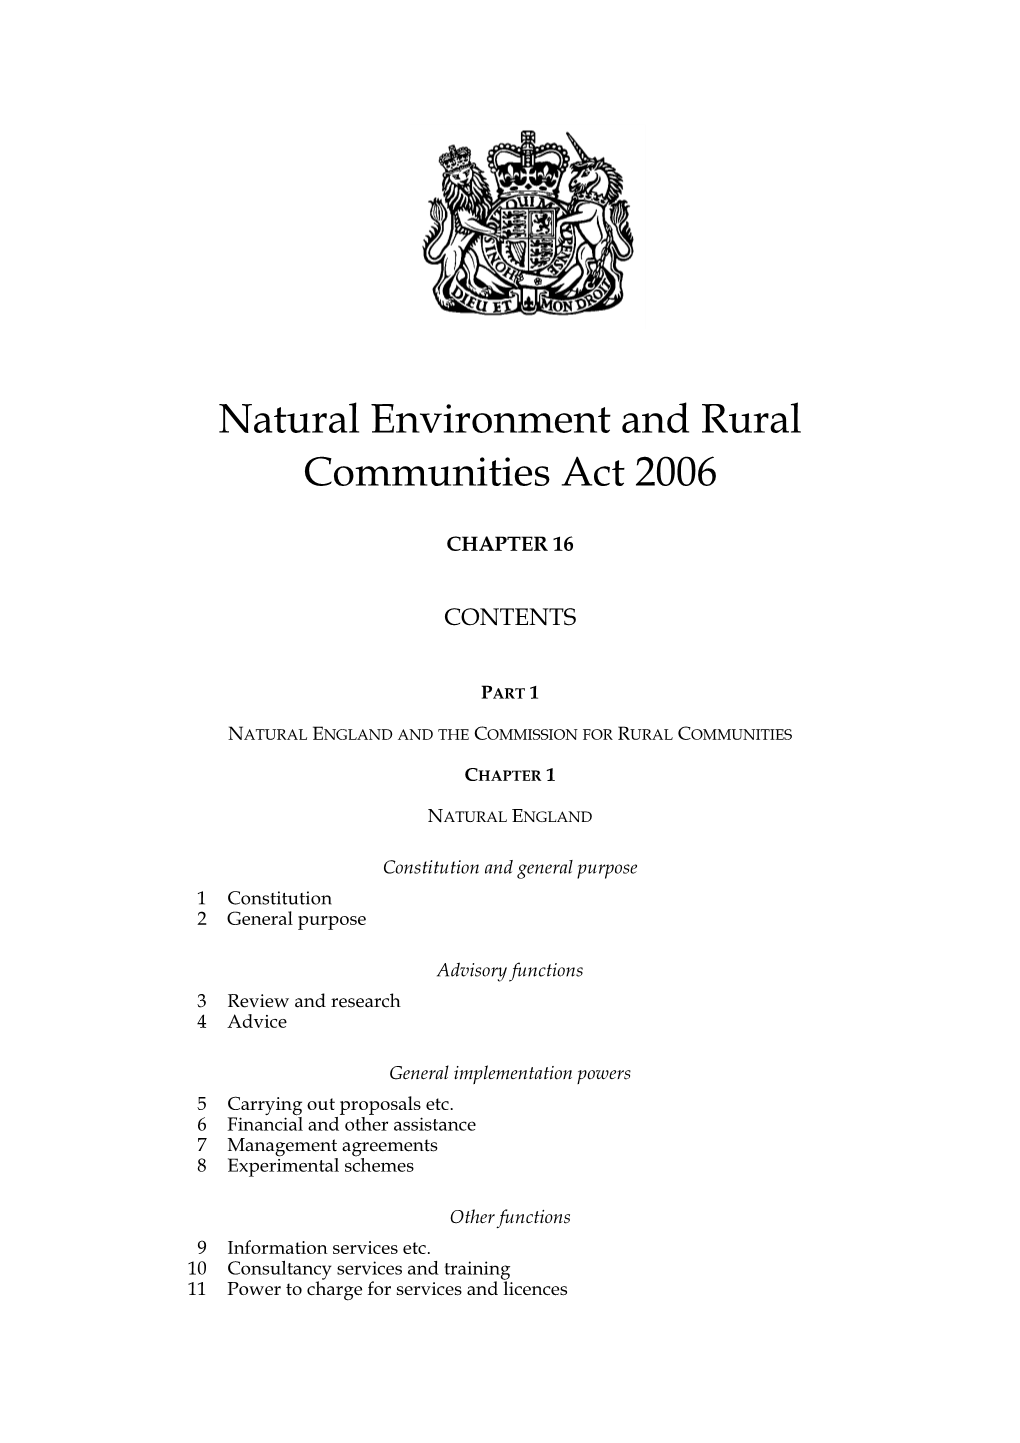 Natural Environment and Rural Communities Act 2006